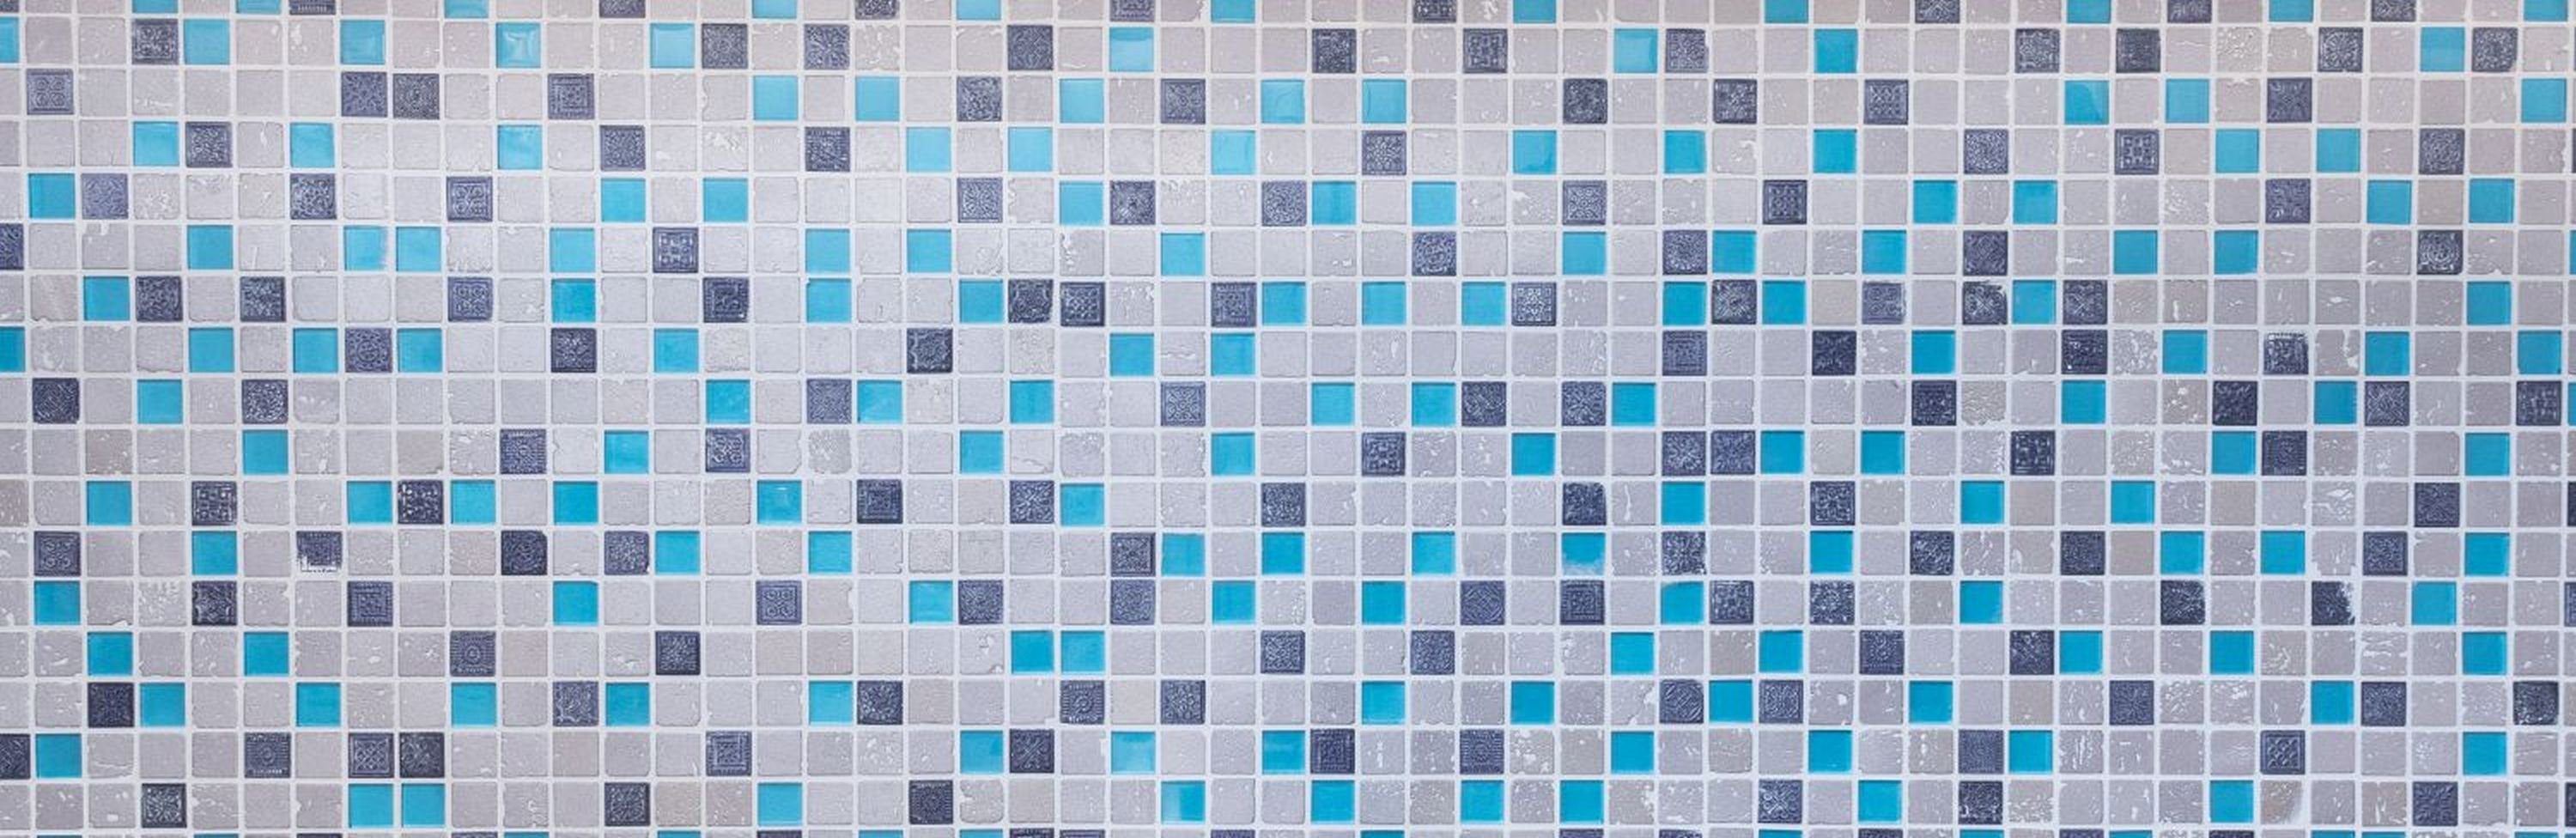 Mosani Kunststein Mosaikfliesen blau grau Mosaikfliese Rustikal Resin Glasmosaik